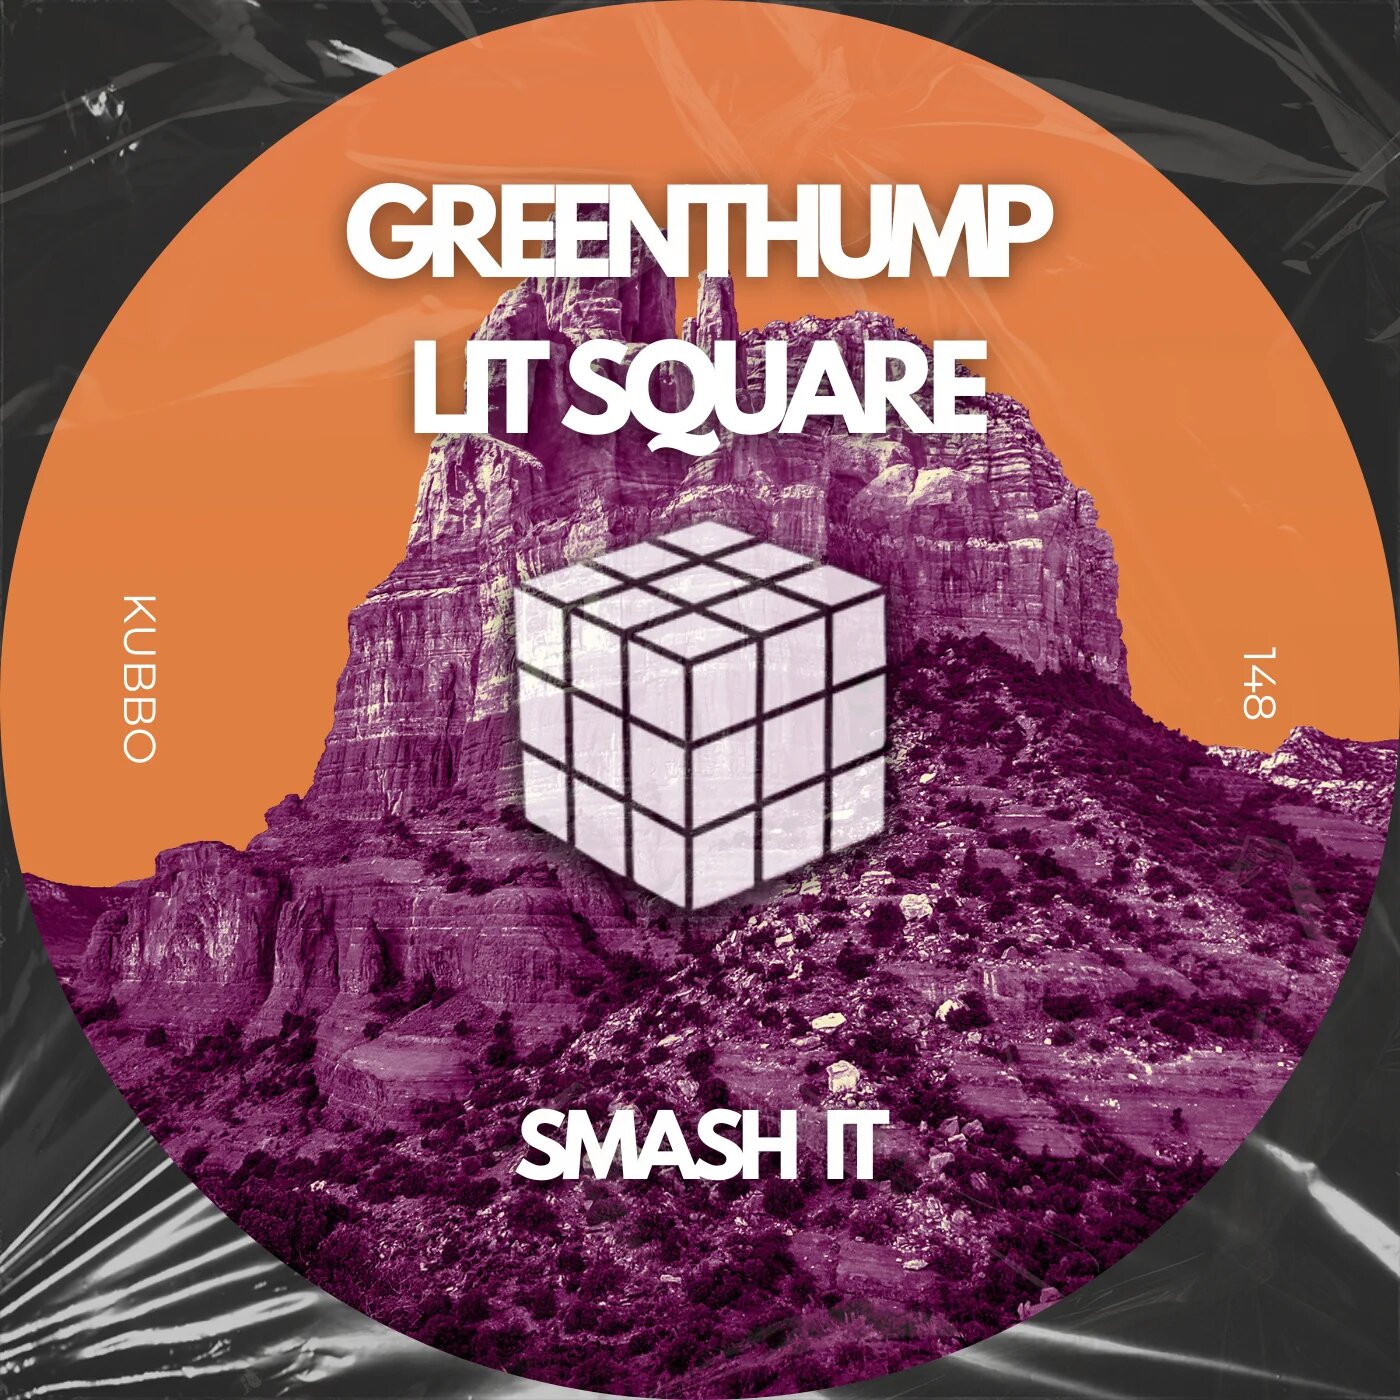 GreenThump, Lit Square - Panic! (Original Mix)